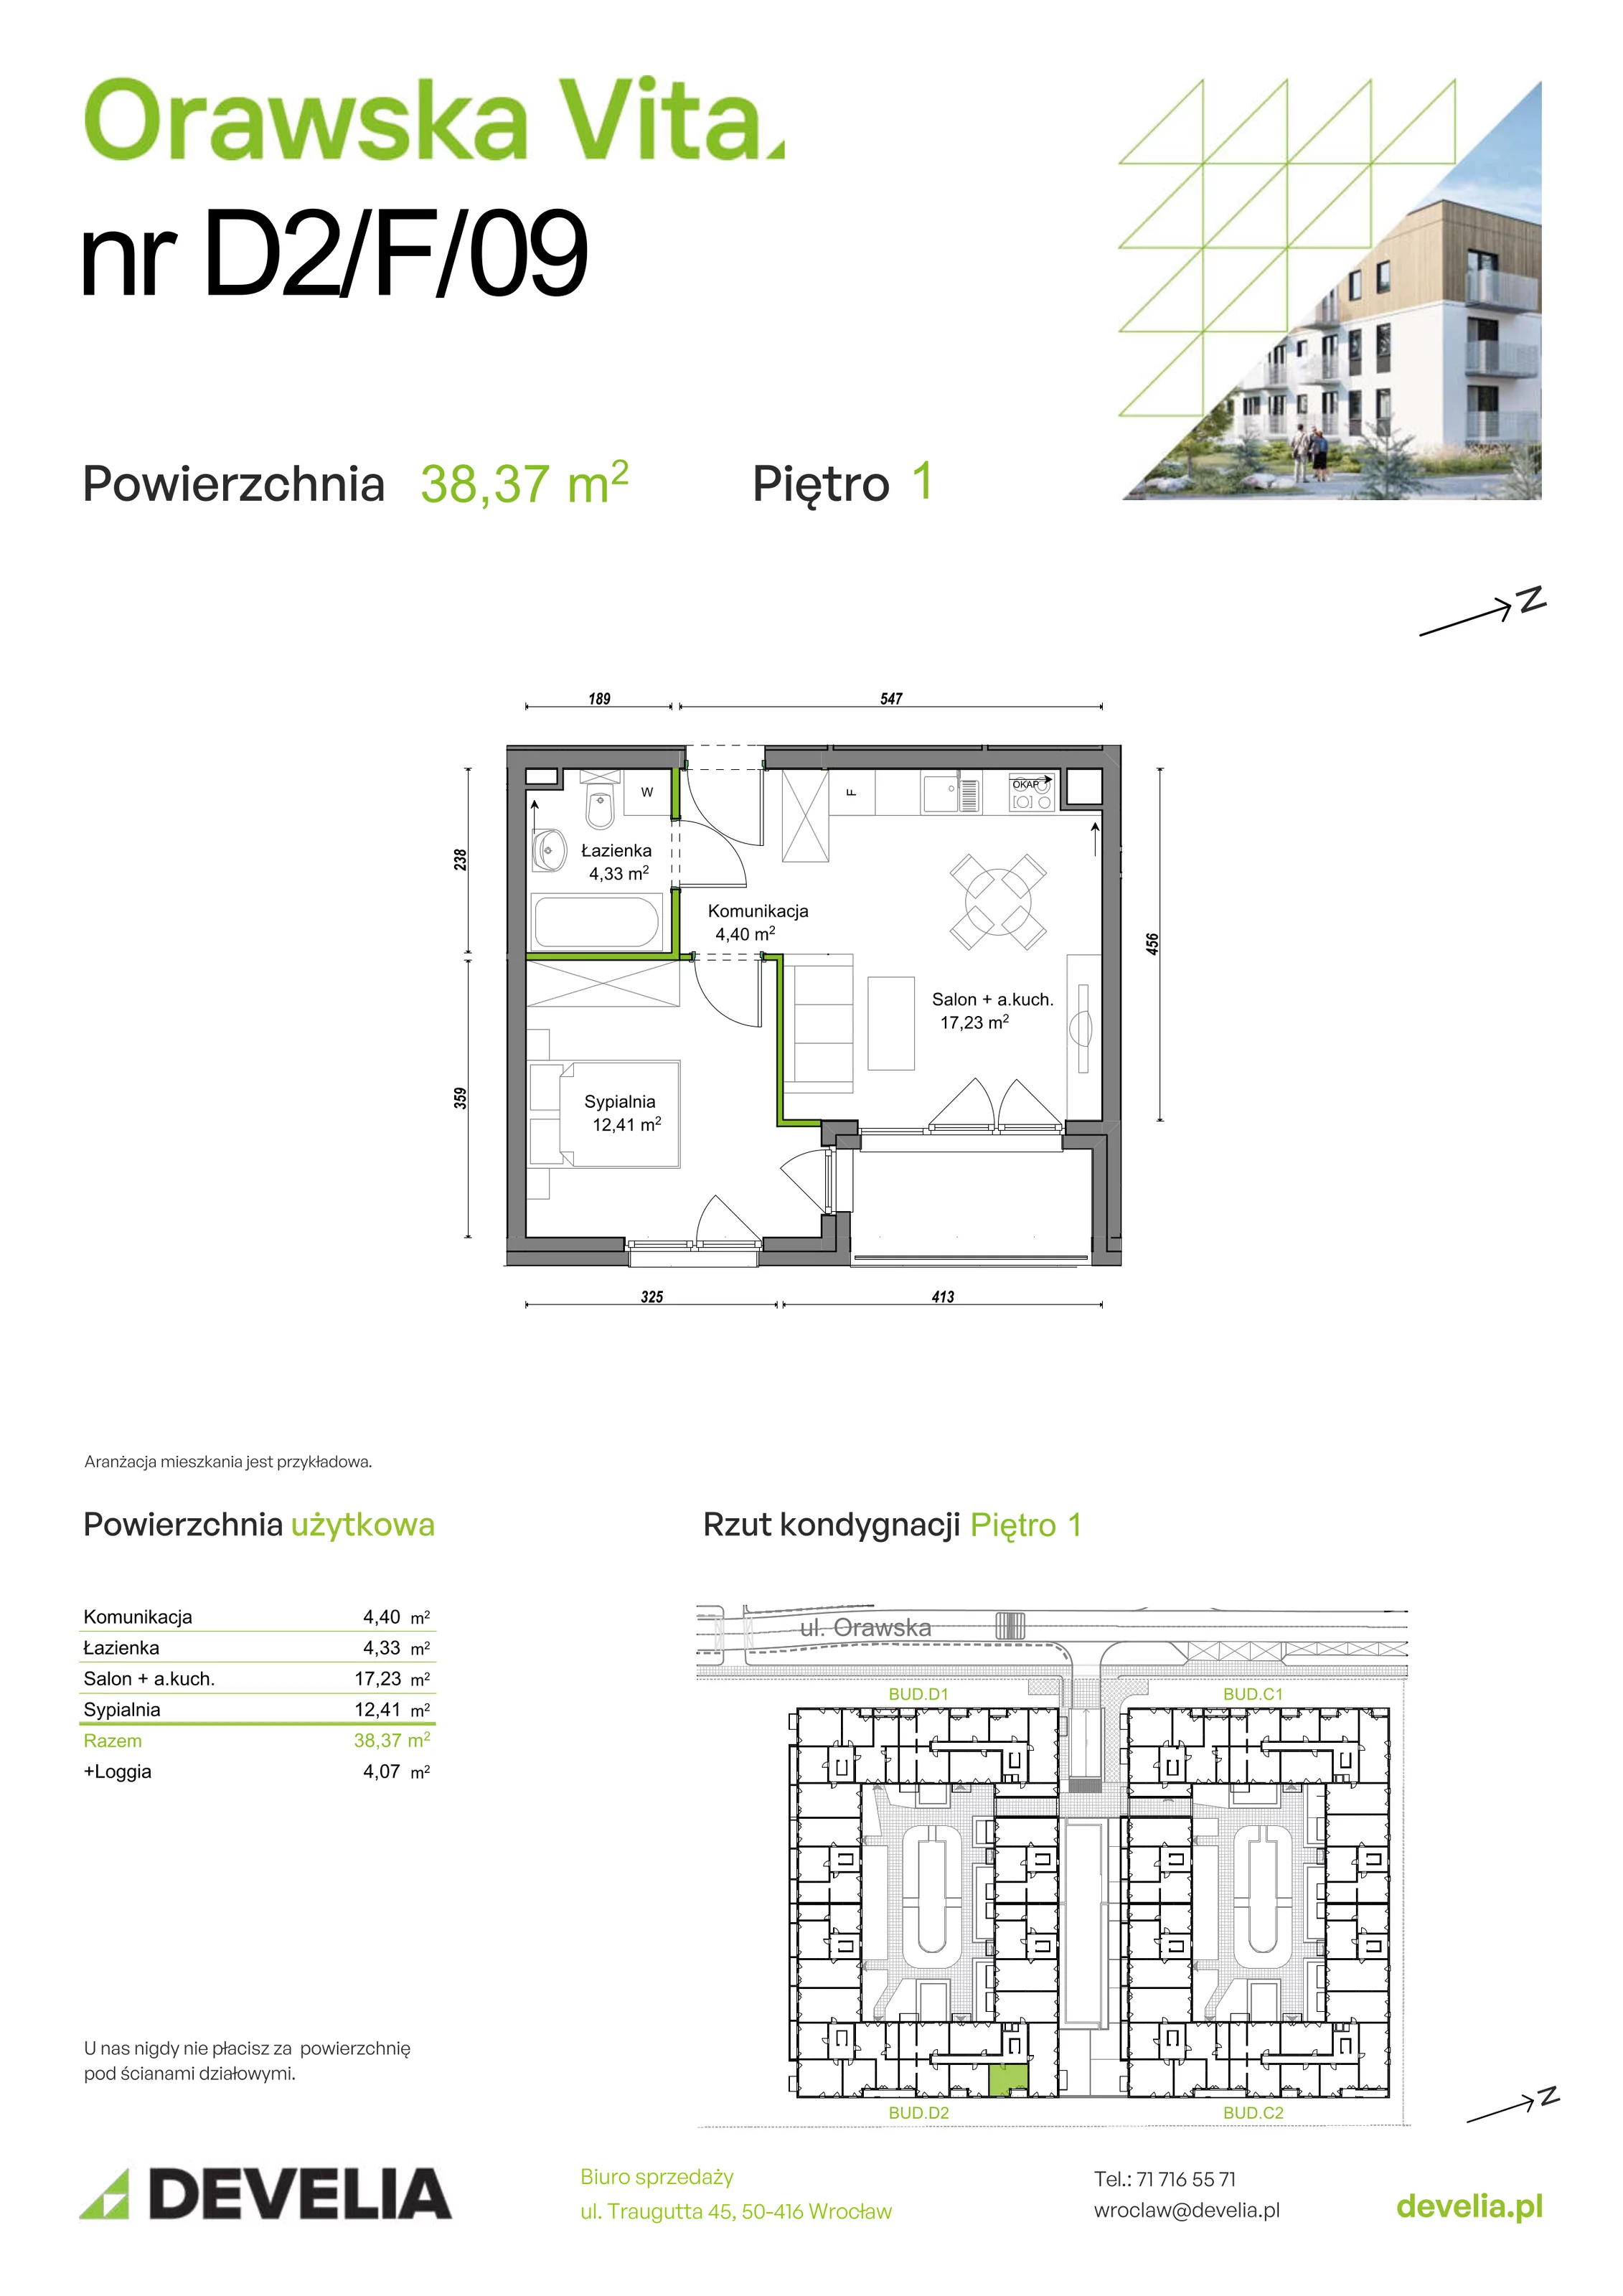 Mieszkanie 38,37 m², piętro 1, oferta nr D2/F/09, Orawska Vita, Wrocław, Ołtaszyn, Krzyki, ul. Orawska 73